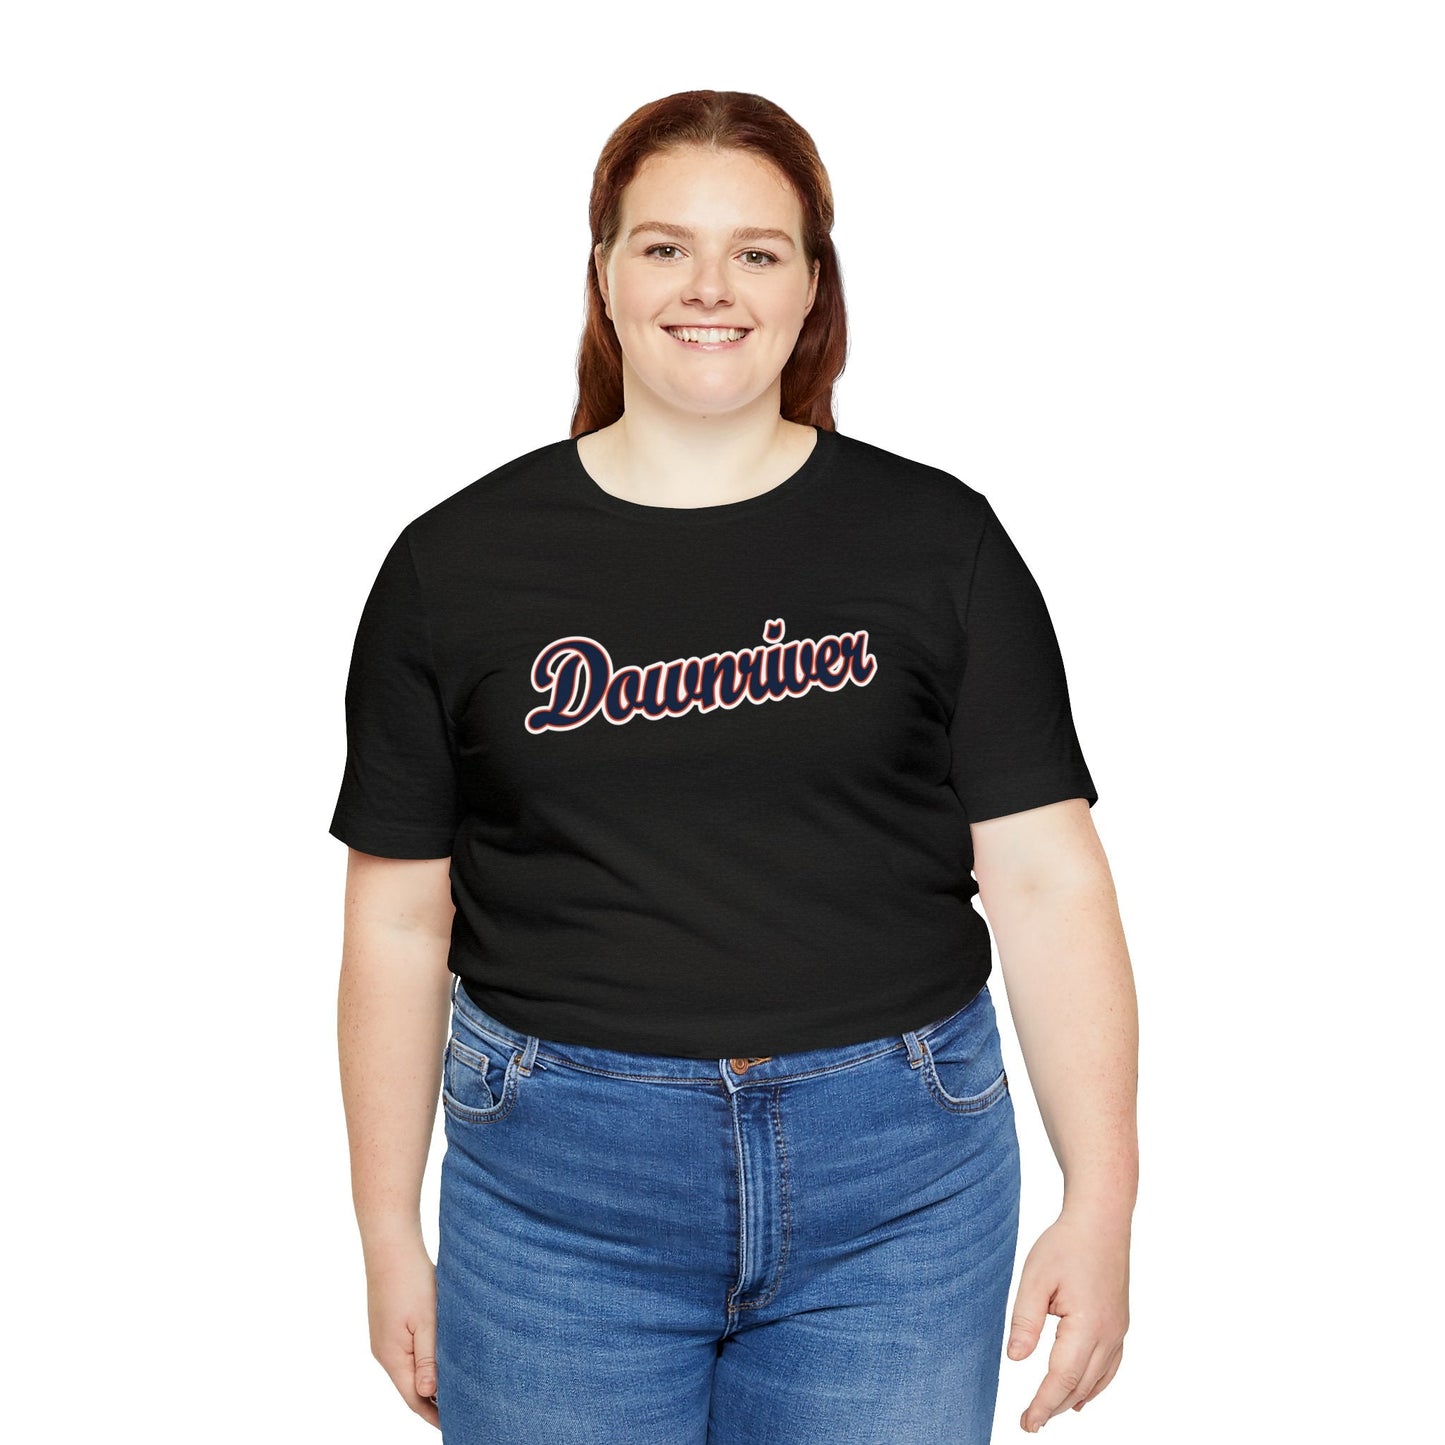 Downriver 95 Baseball Soft Jersey T Shirt | Downriver Clothing Apparel | Detroit Michigan | Downriver World